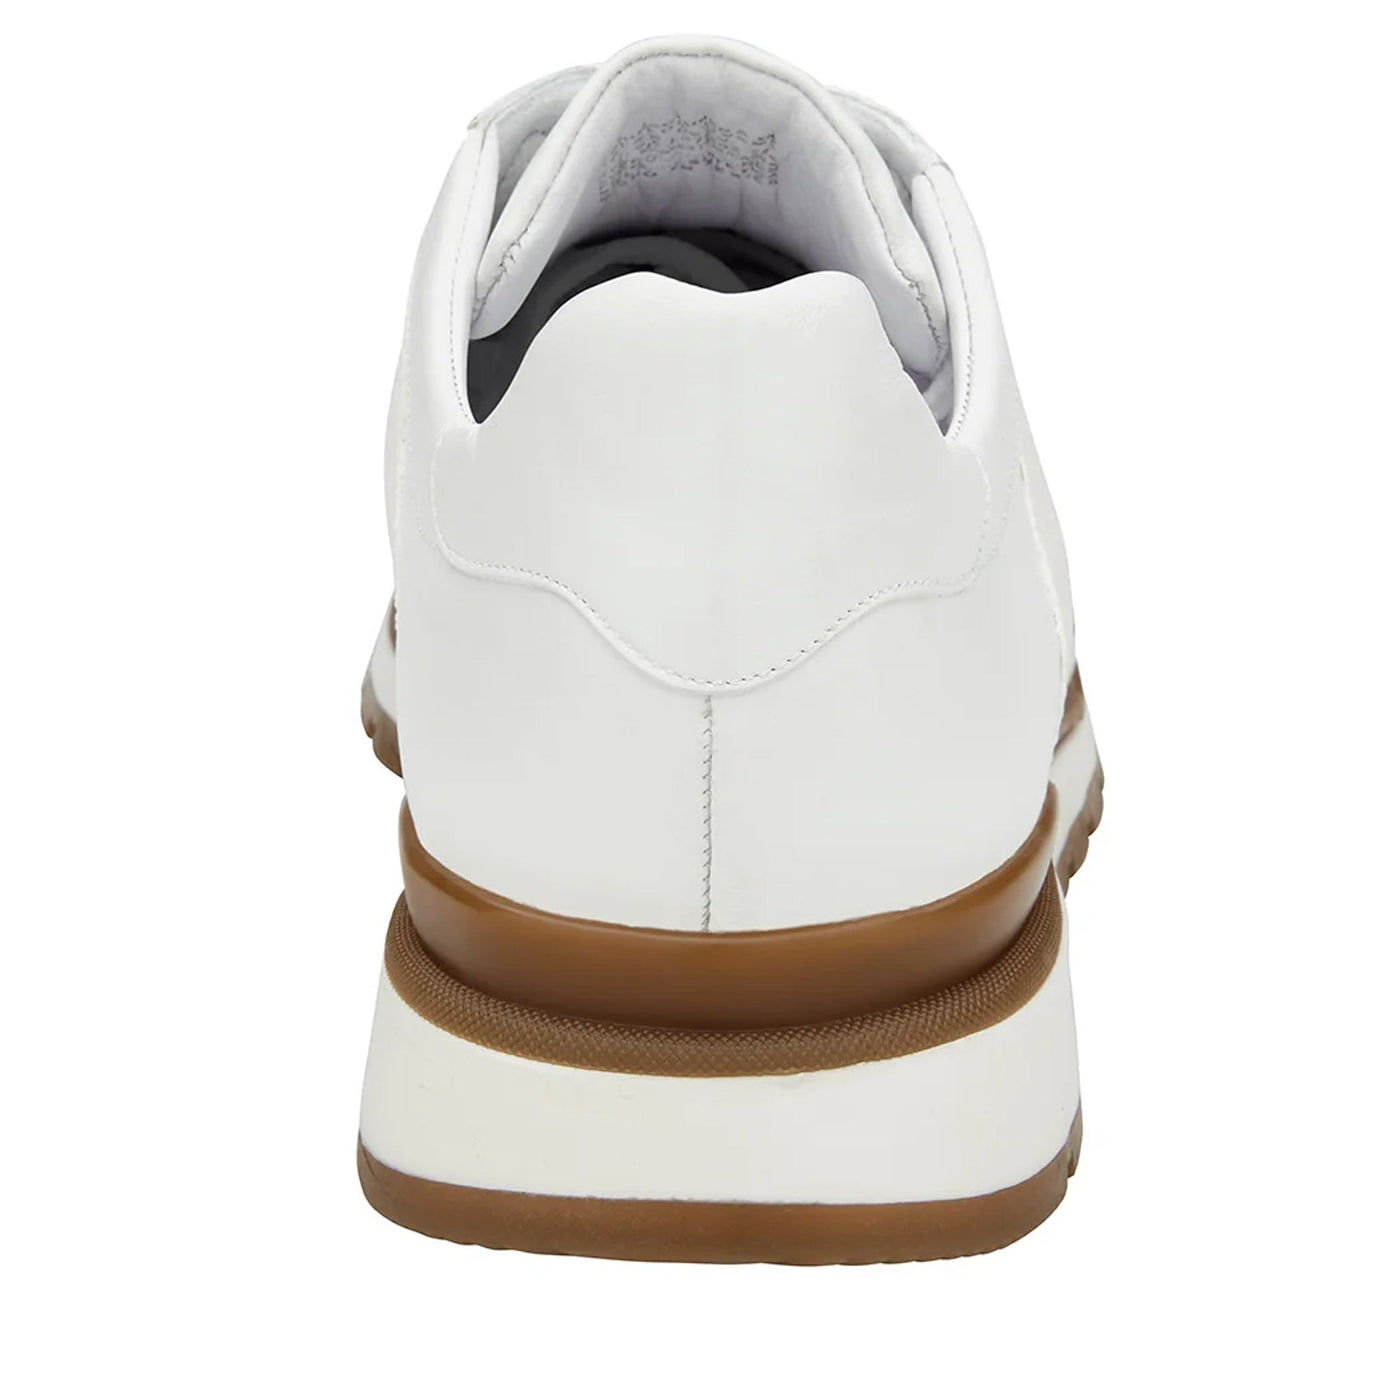 Men's Belvedere Blake Calf & Ostrich Leg Dress Sneaker in White